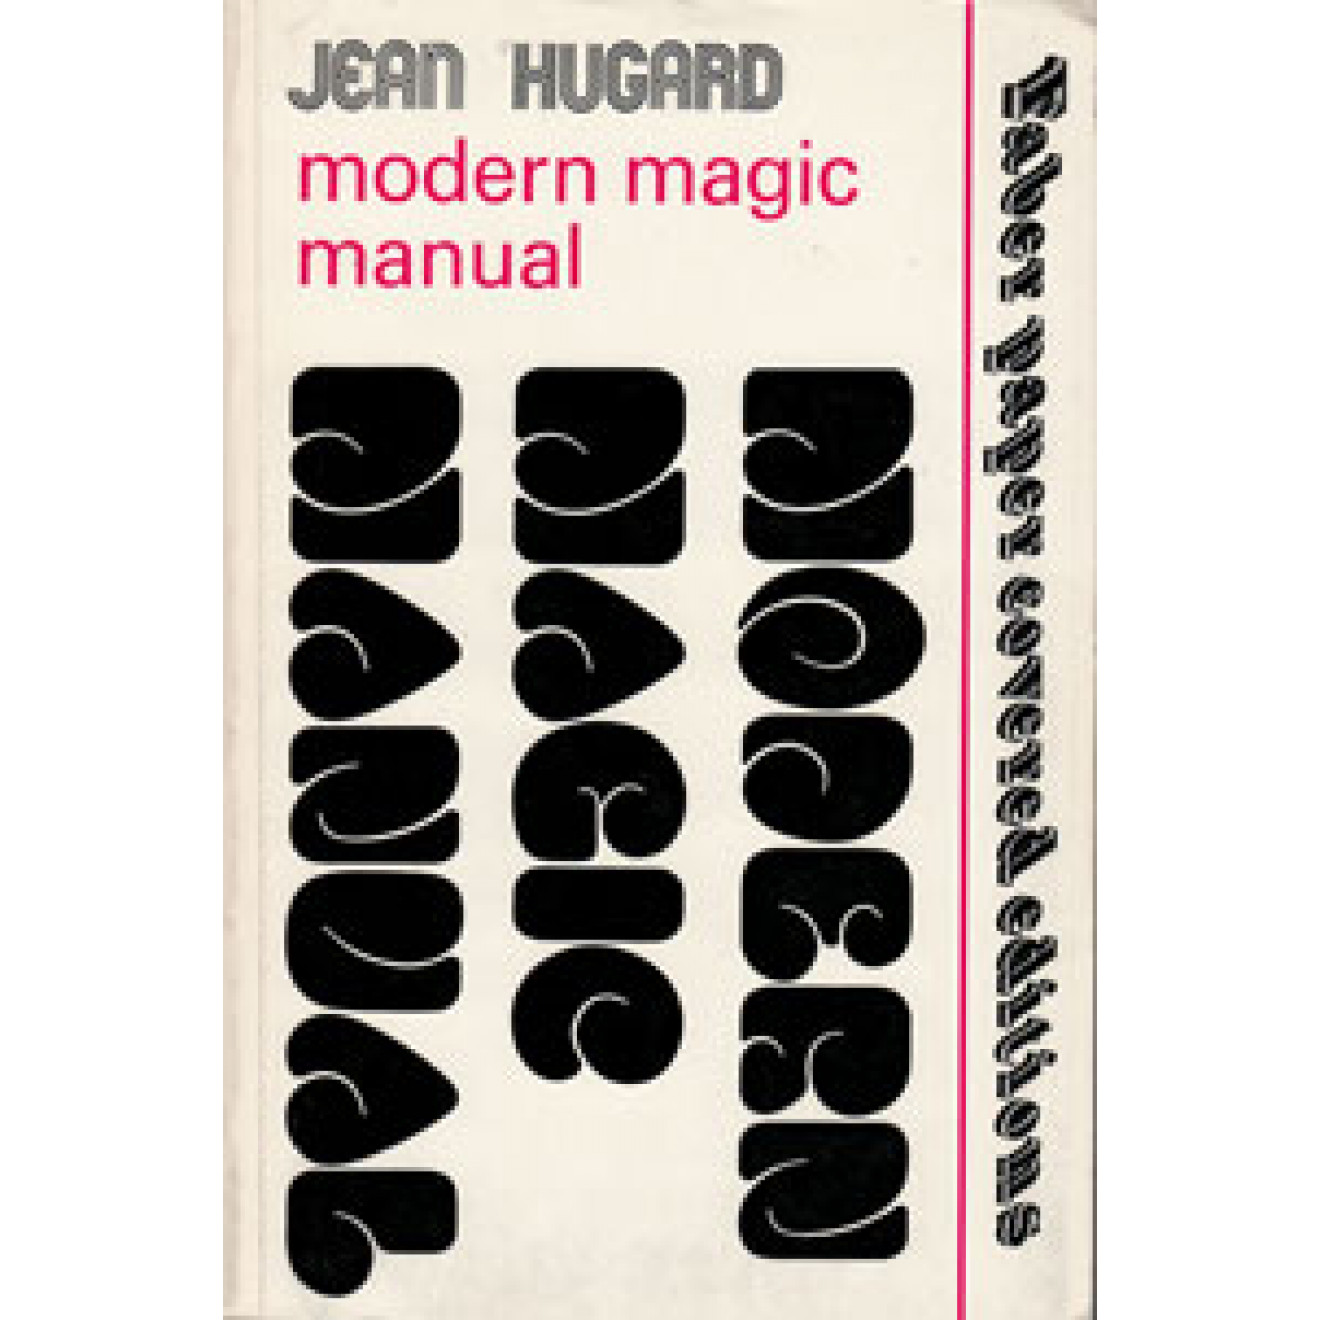 Modern Magic Manual